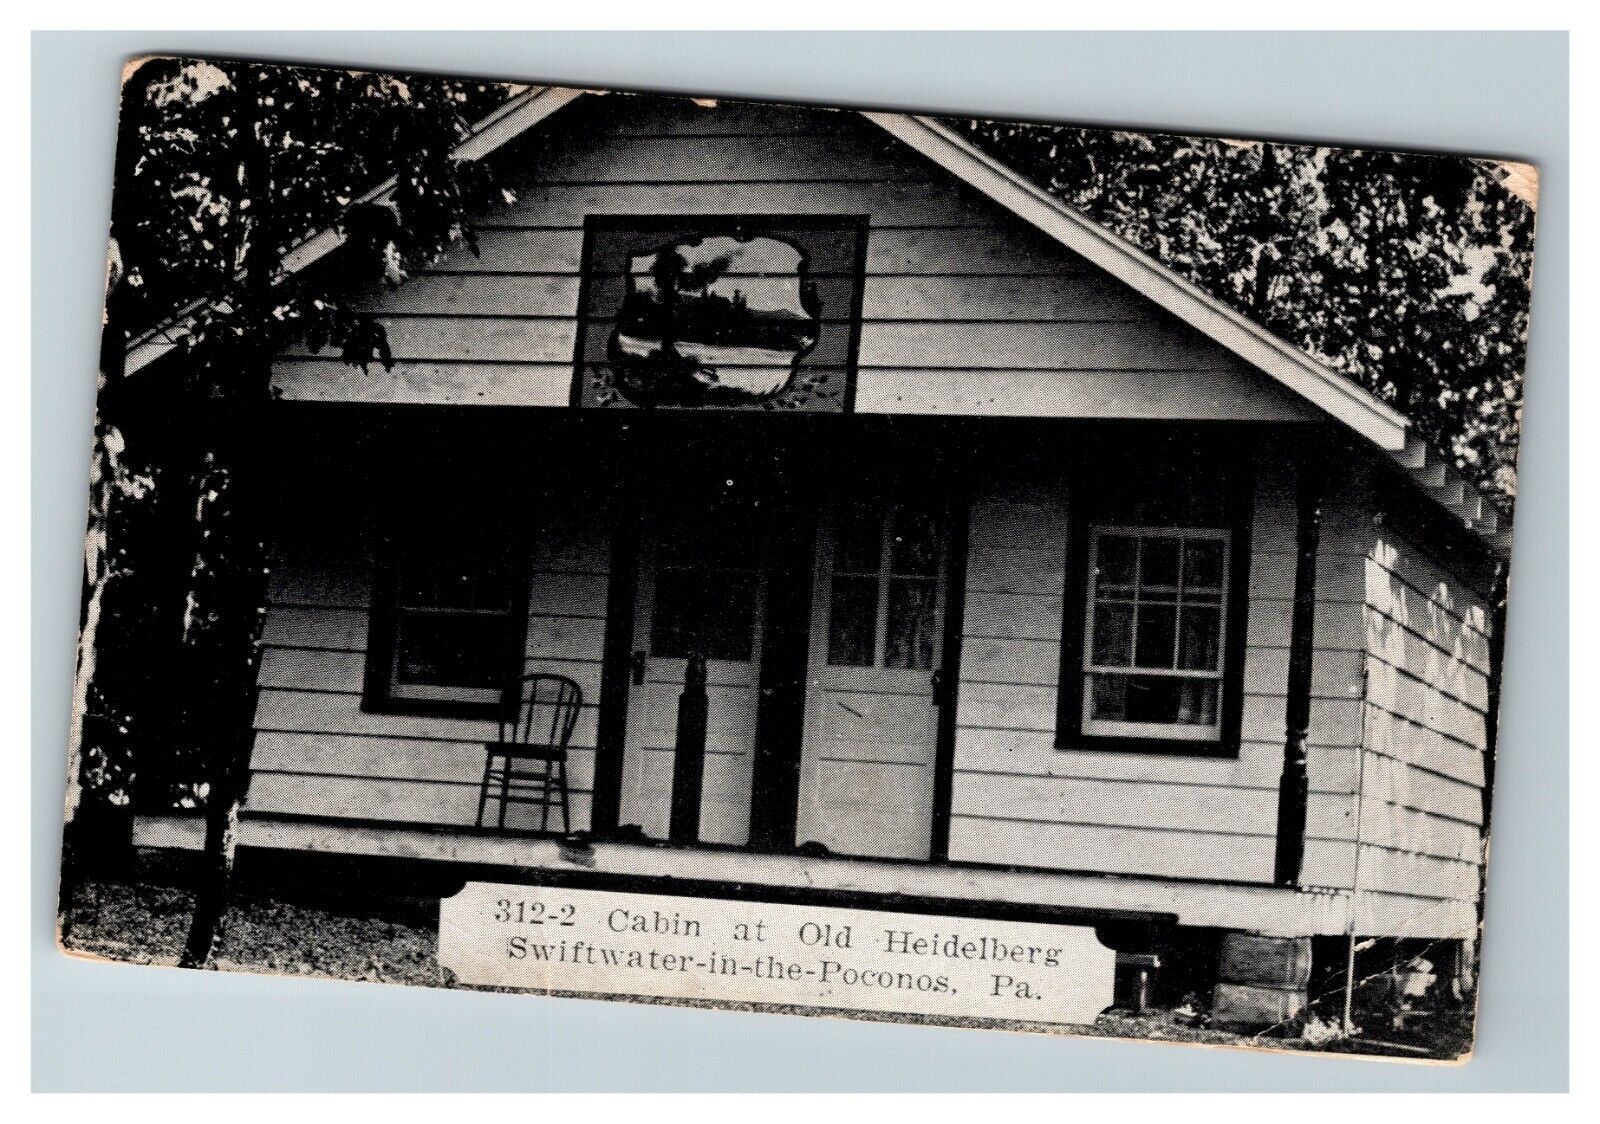 Cabin at Old Heidelberg, Swiftwater-in-the Poconos PA c1935 Vintage Postcard